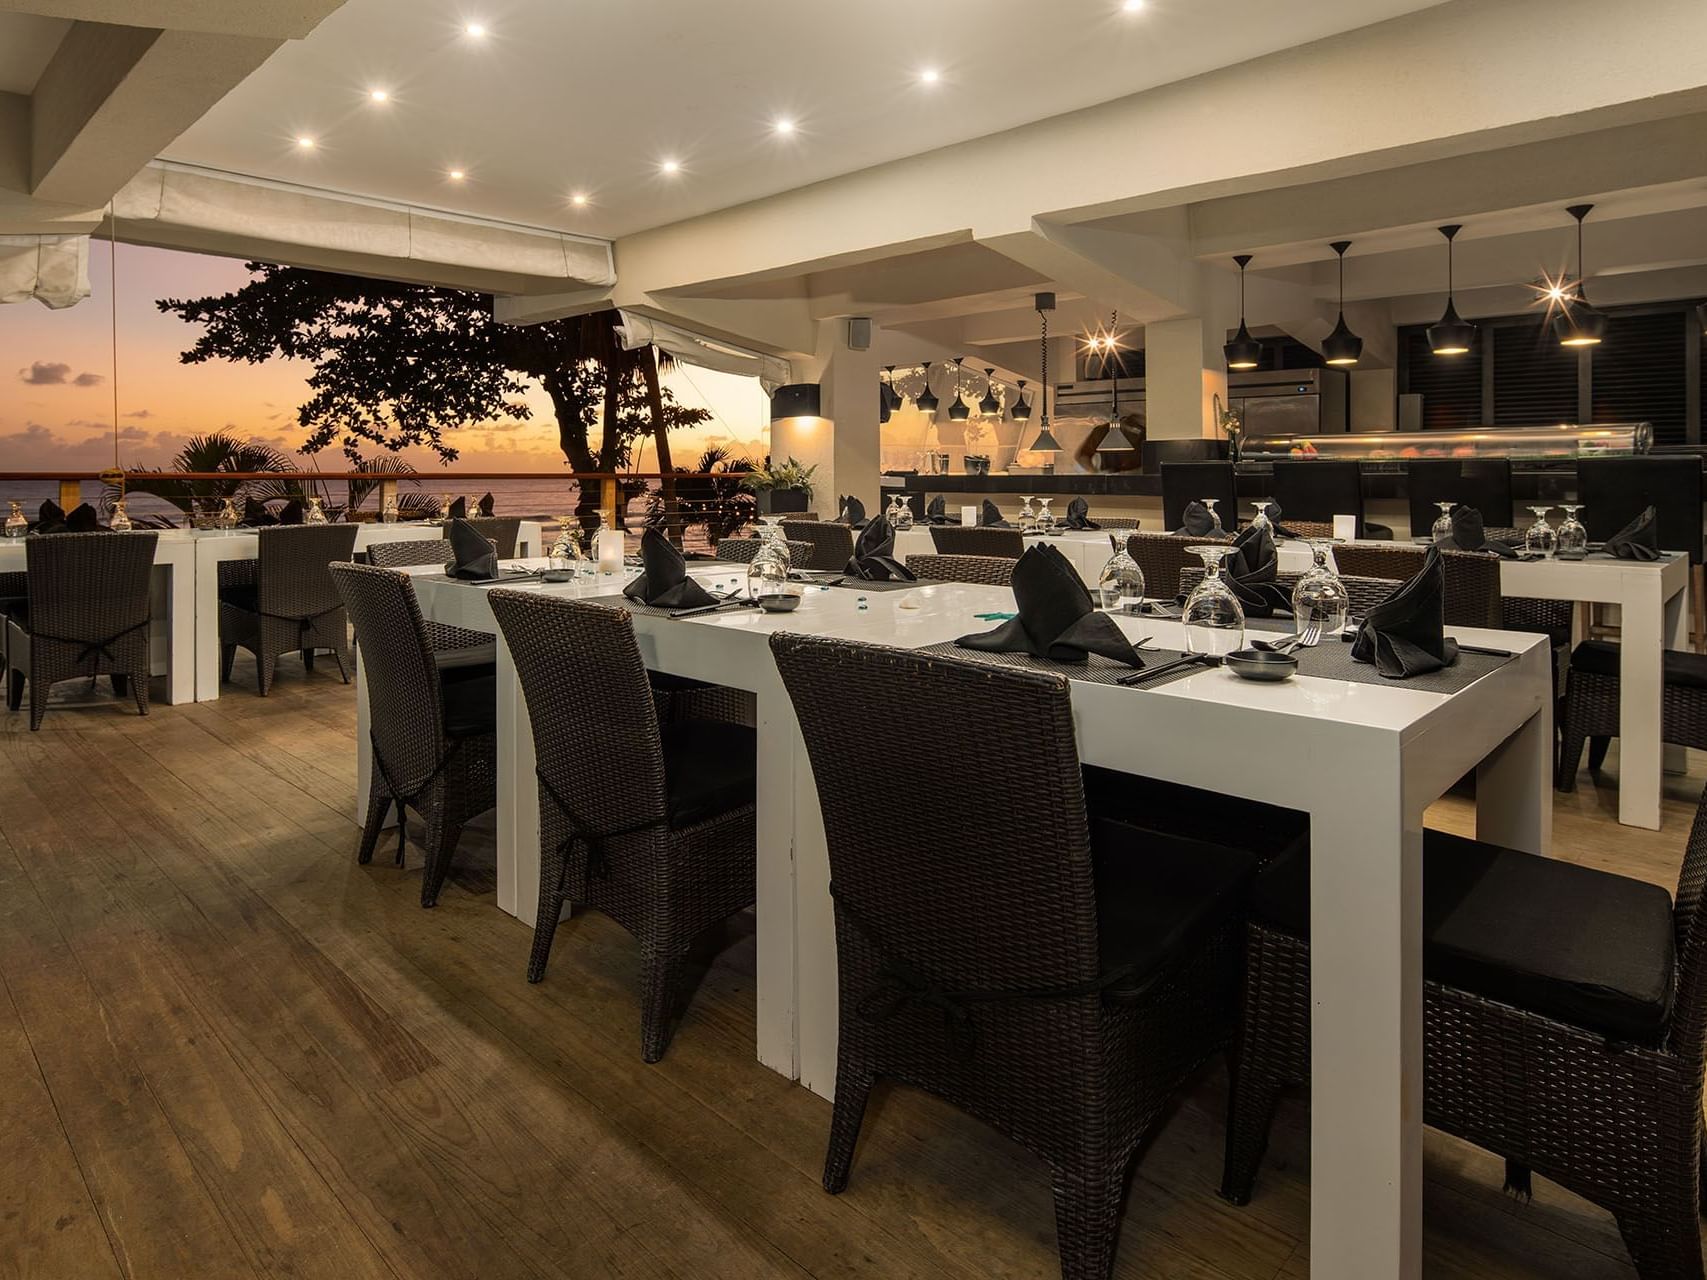 Arranged dining area in Umi Restaurant at Sugar Bay Barbados